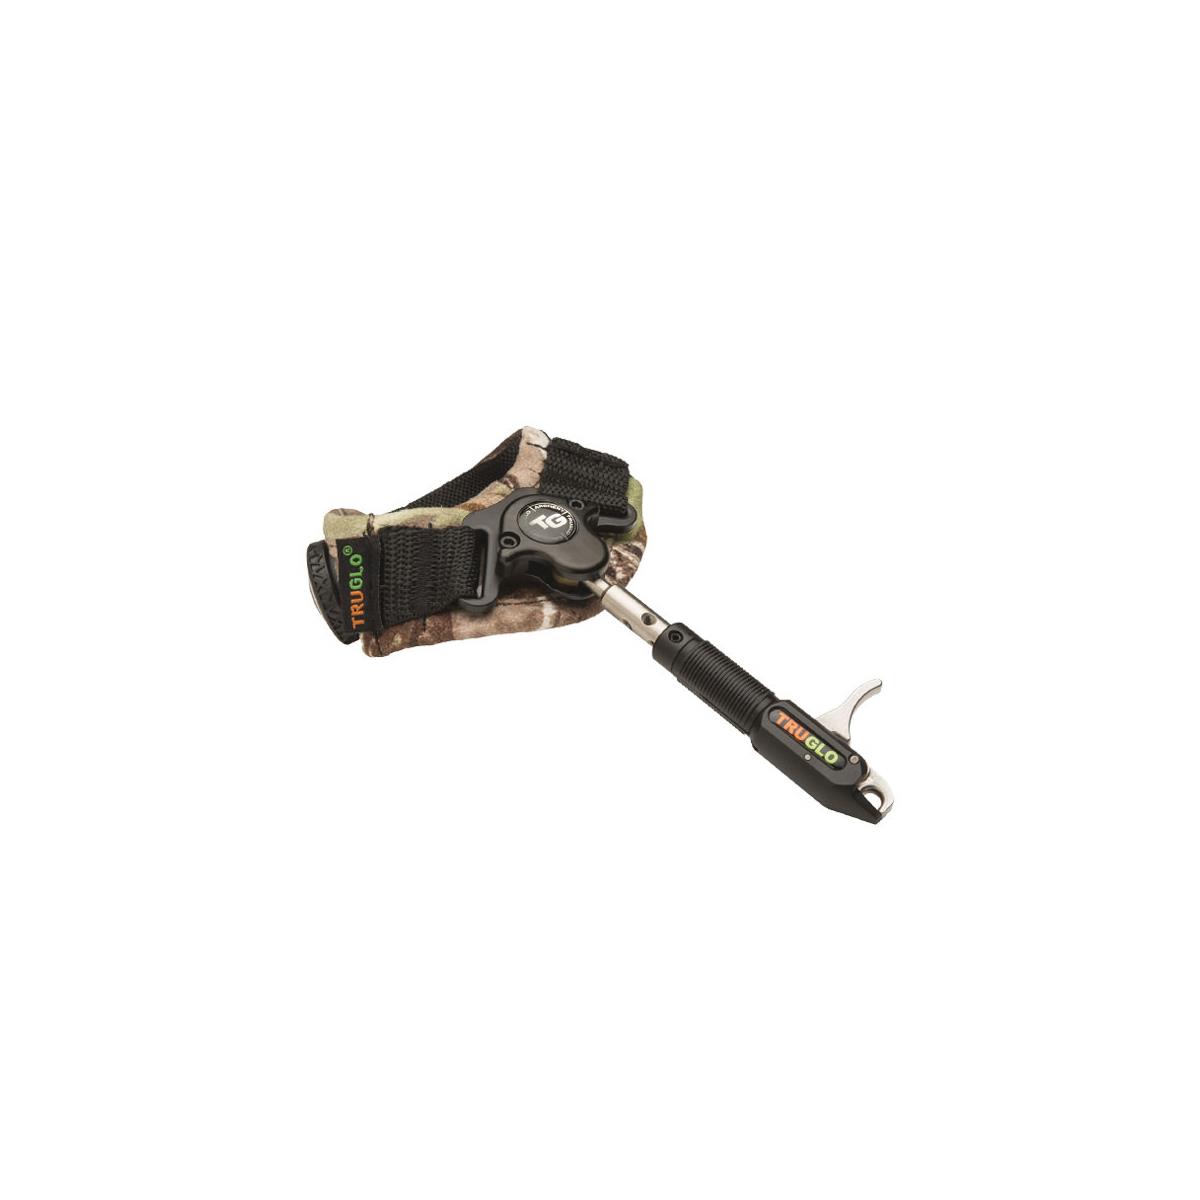 

TruGlo Activator Archery Release with BOA Wrist Strap, Real Tree APG Camo